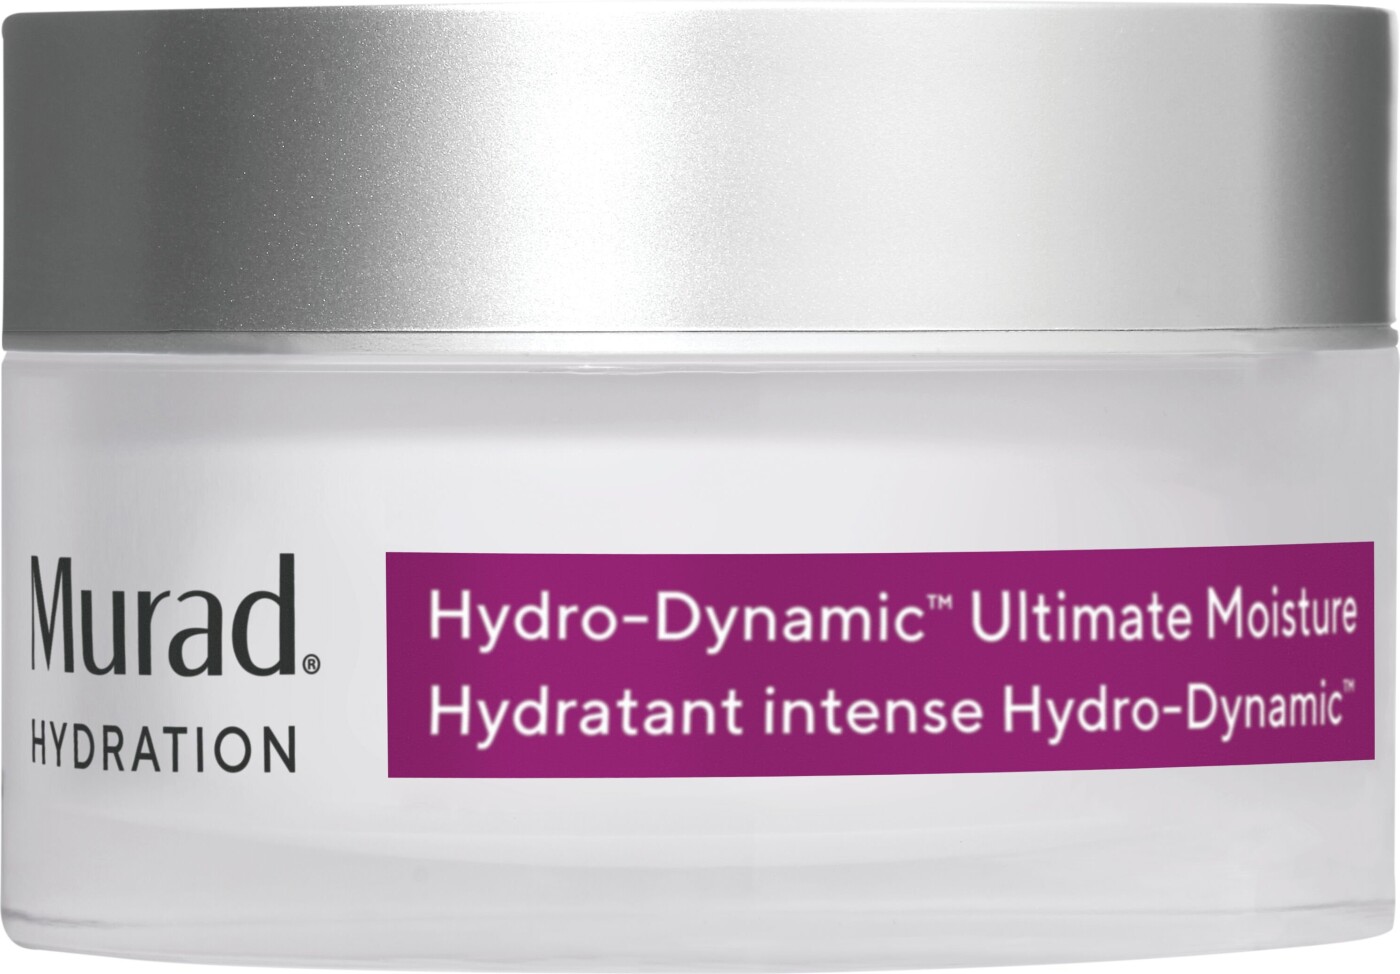 Billede af Murad - Hydration Hydro-dynamic Ultimate Moisture 50 Ml hos Gucca.dk